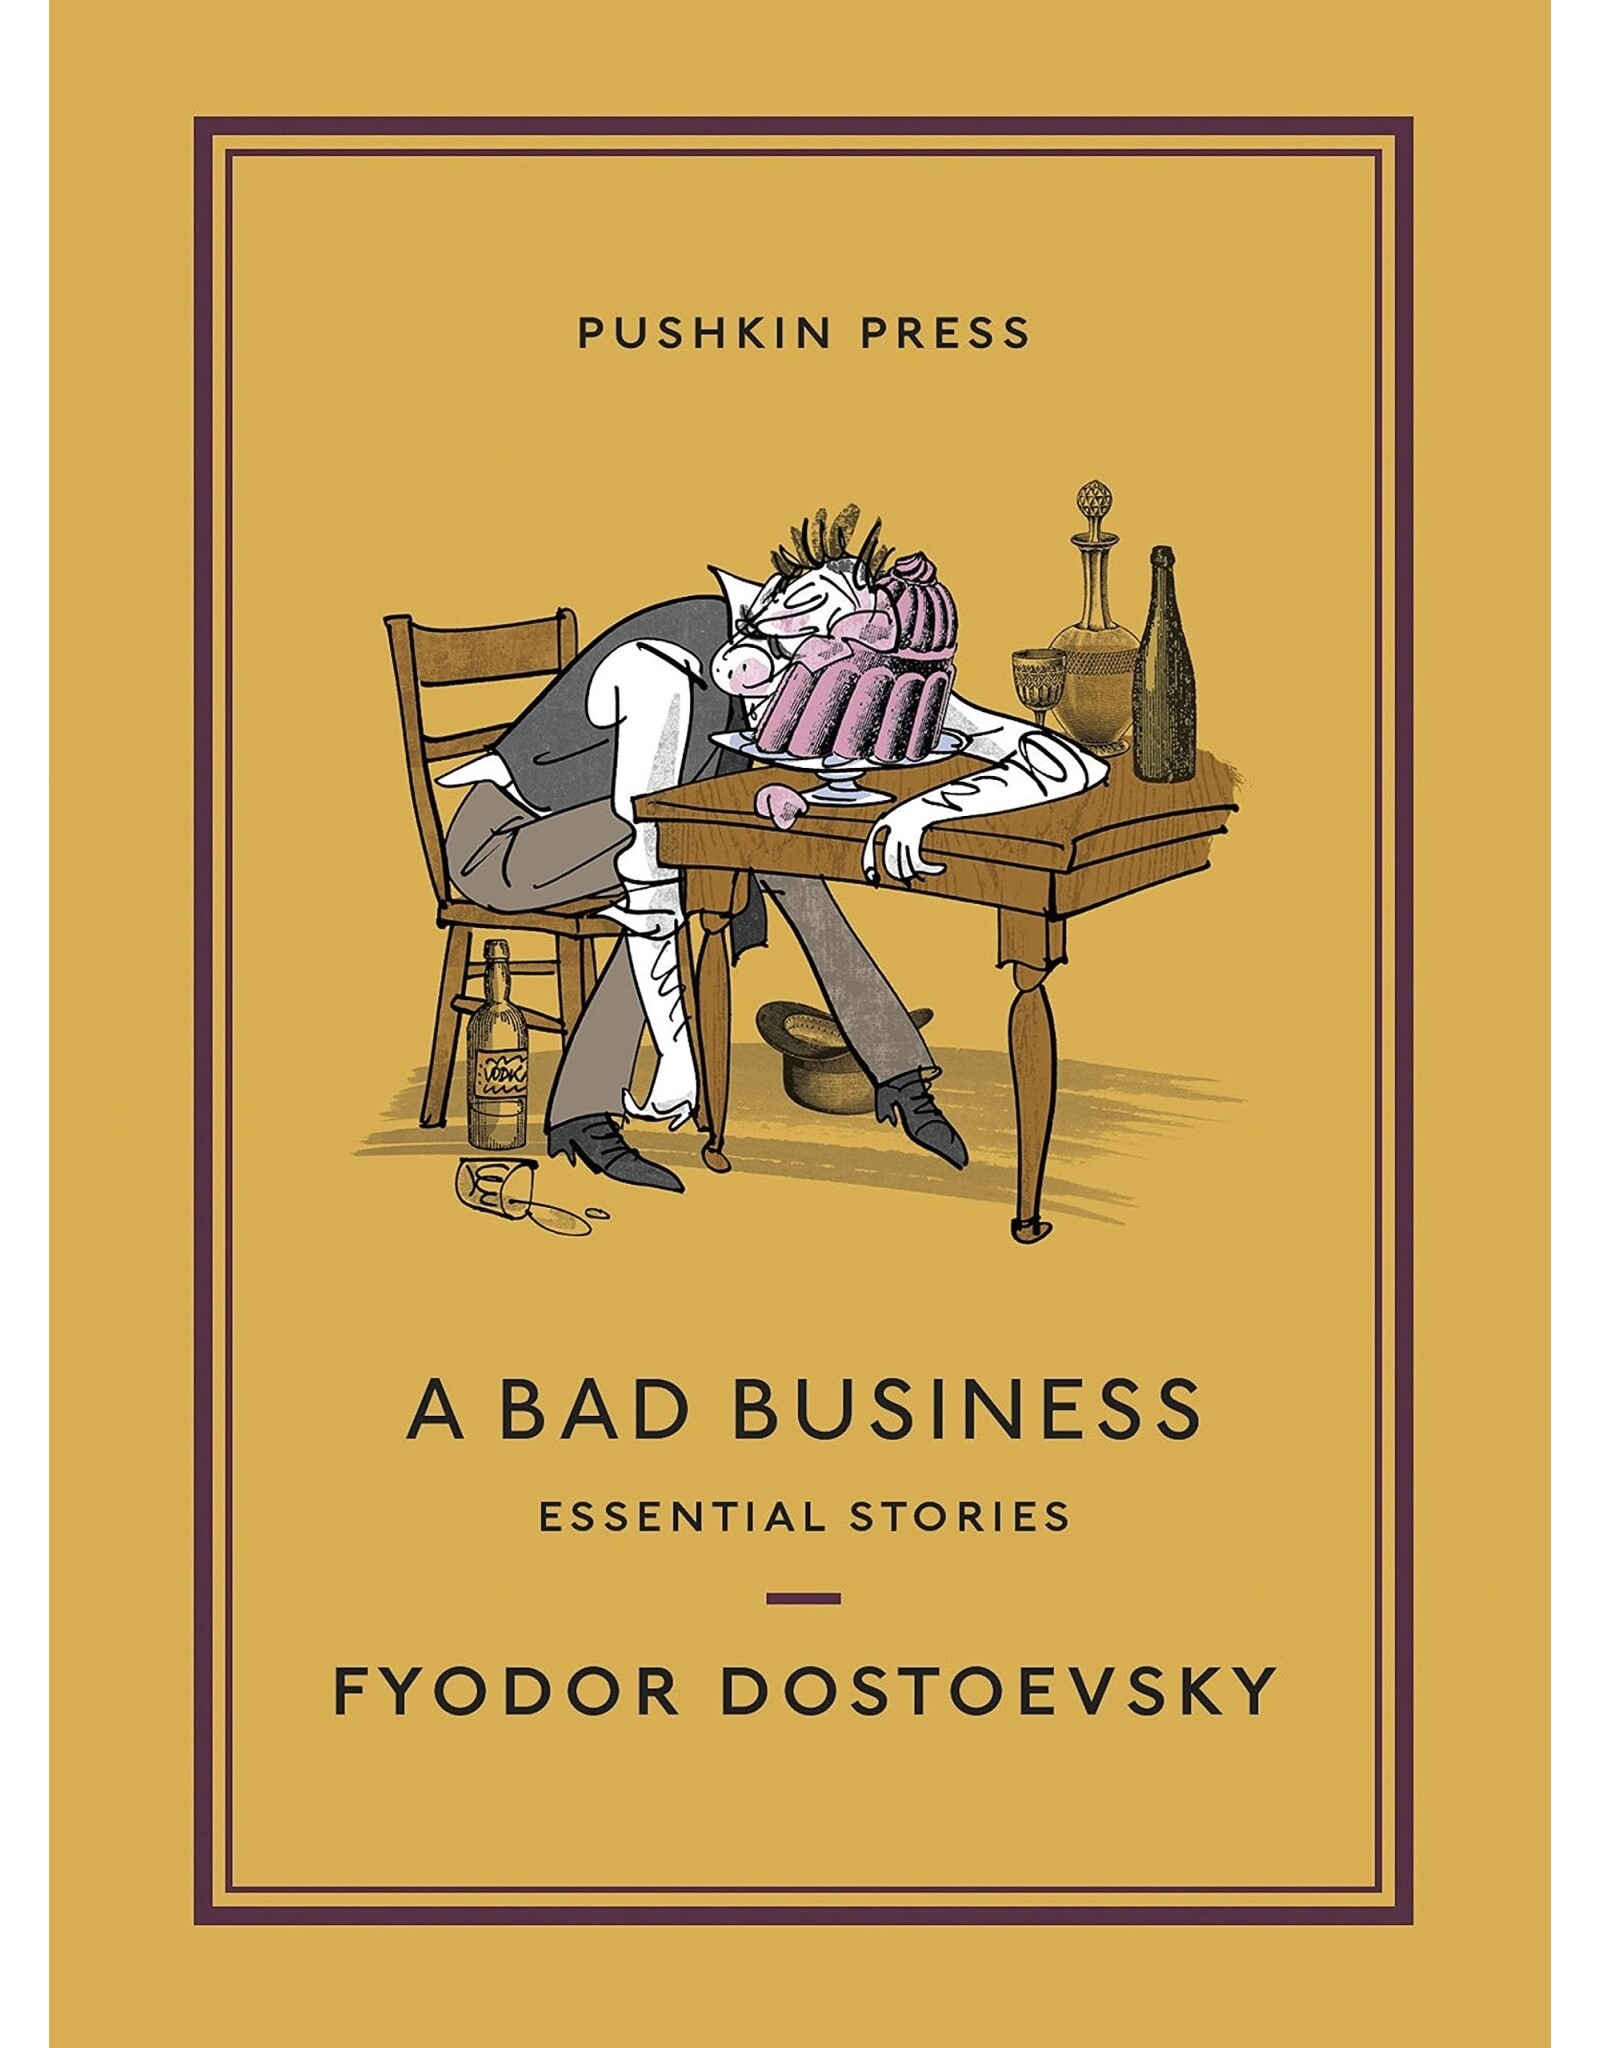 A Bad Business: Fyodor Dostoyevsky Essential Stories